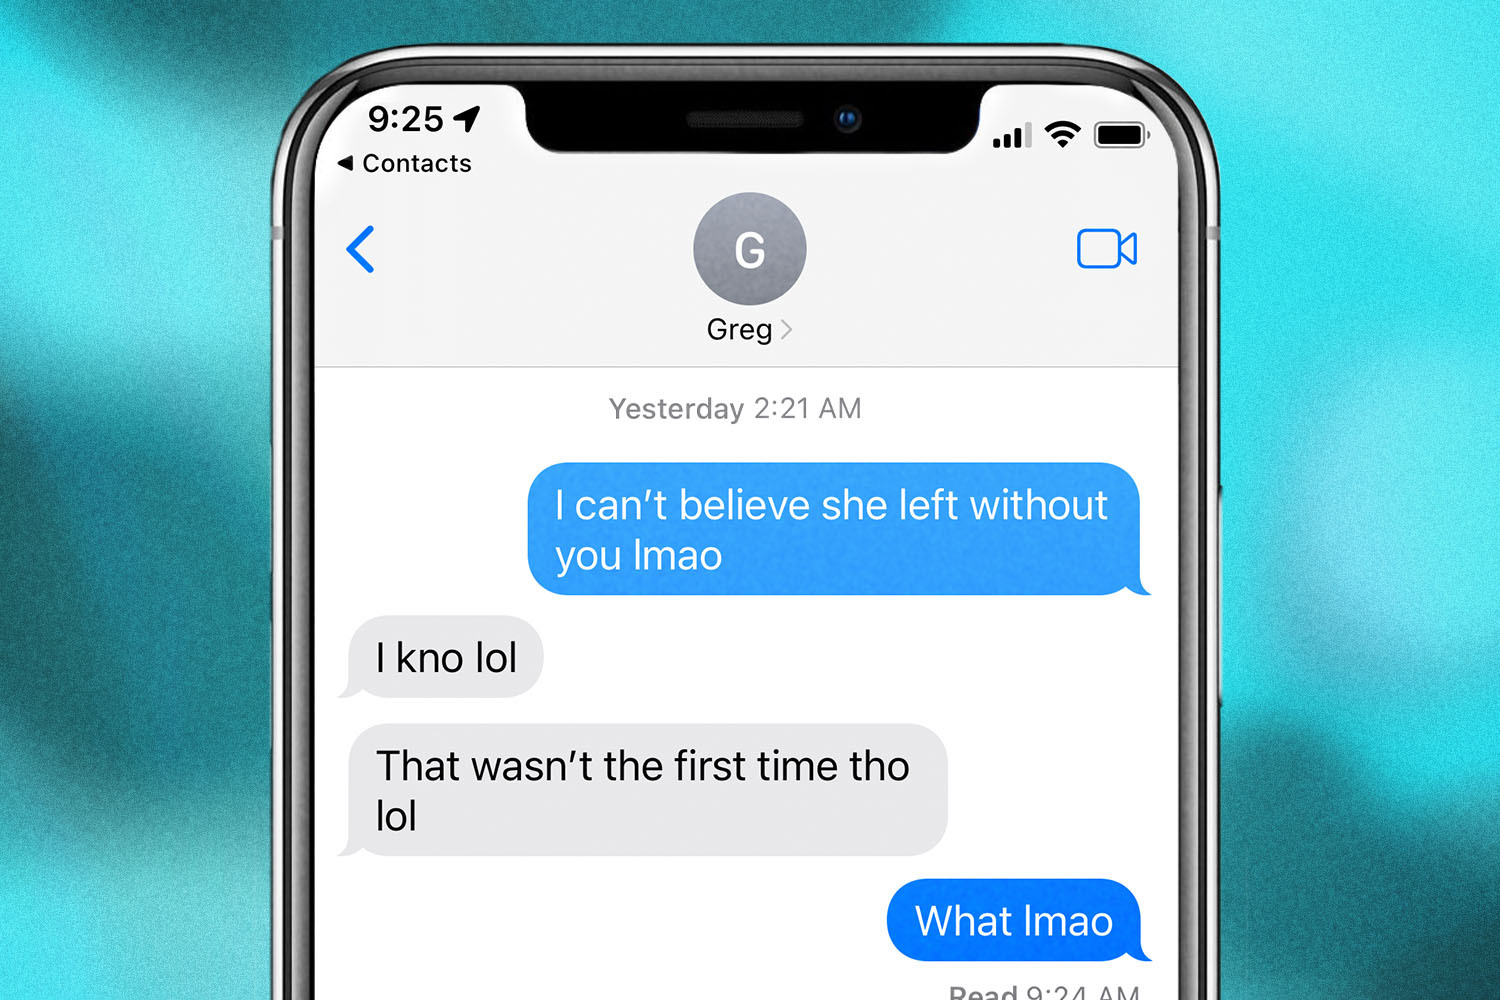 A an iPhone with a text message conversation